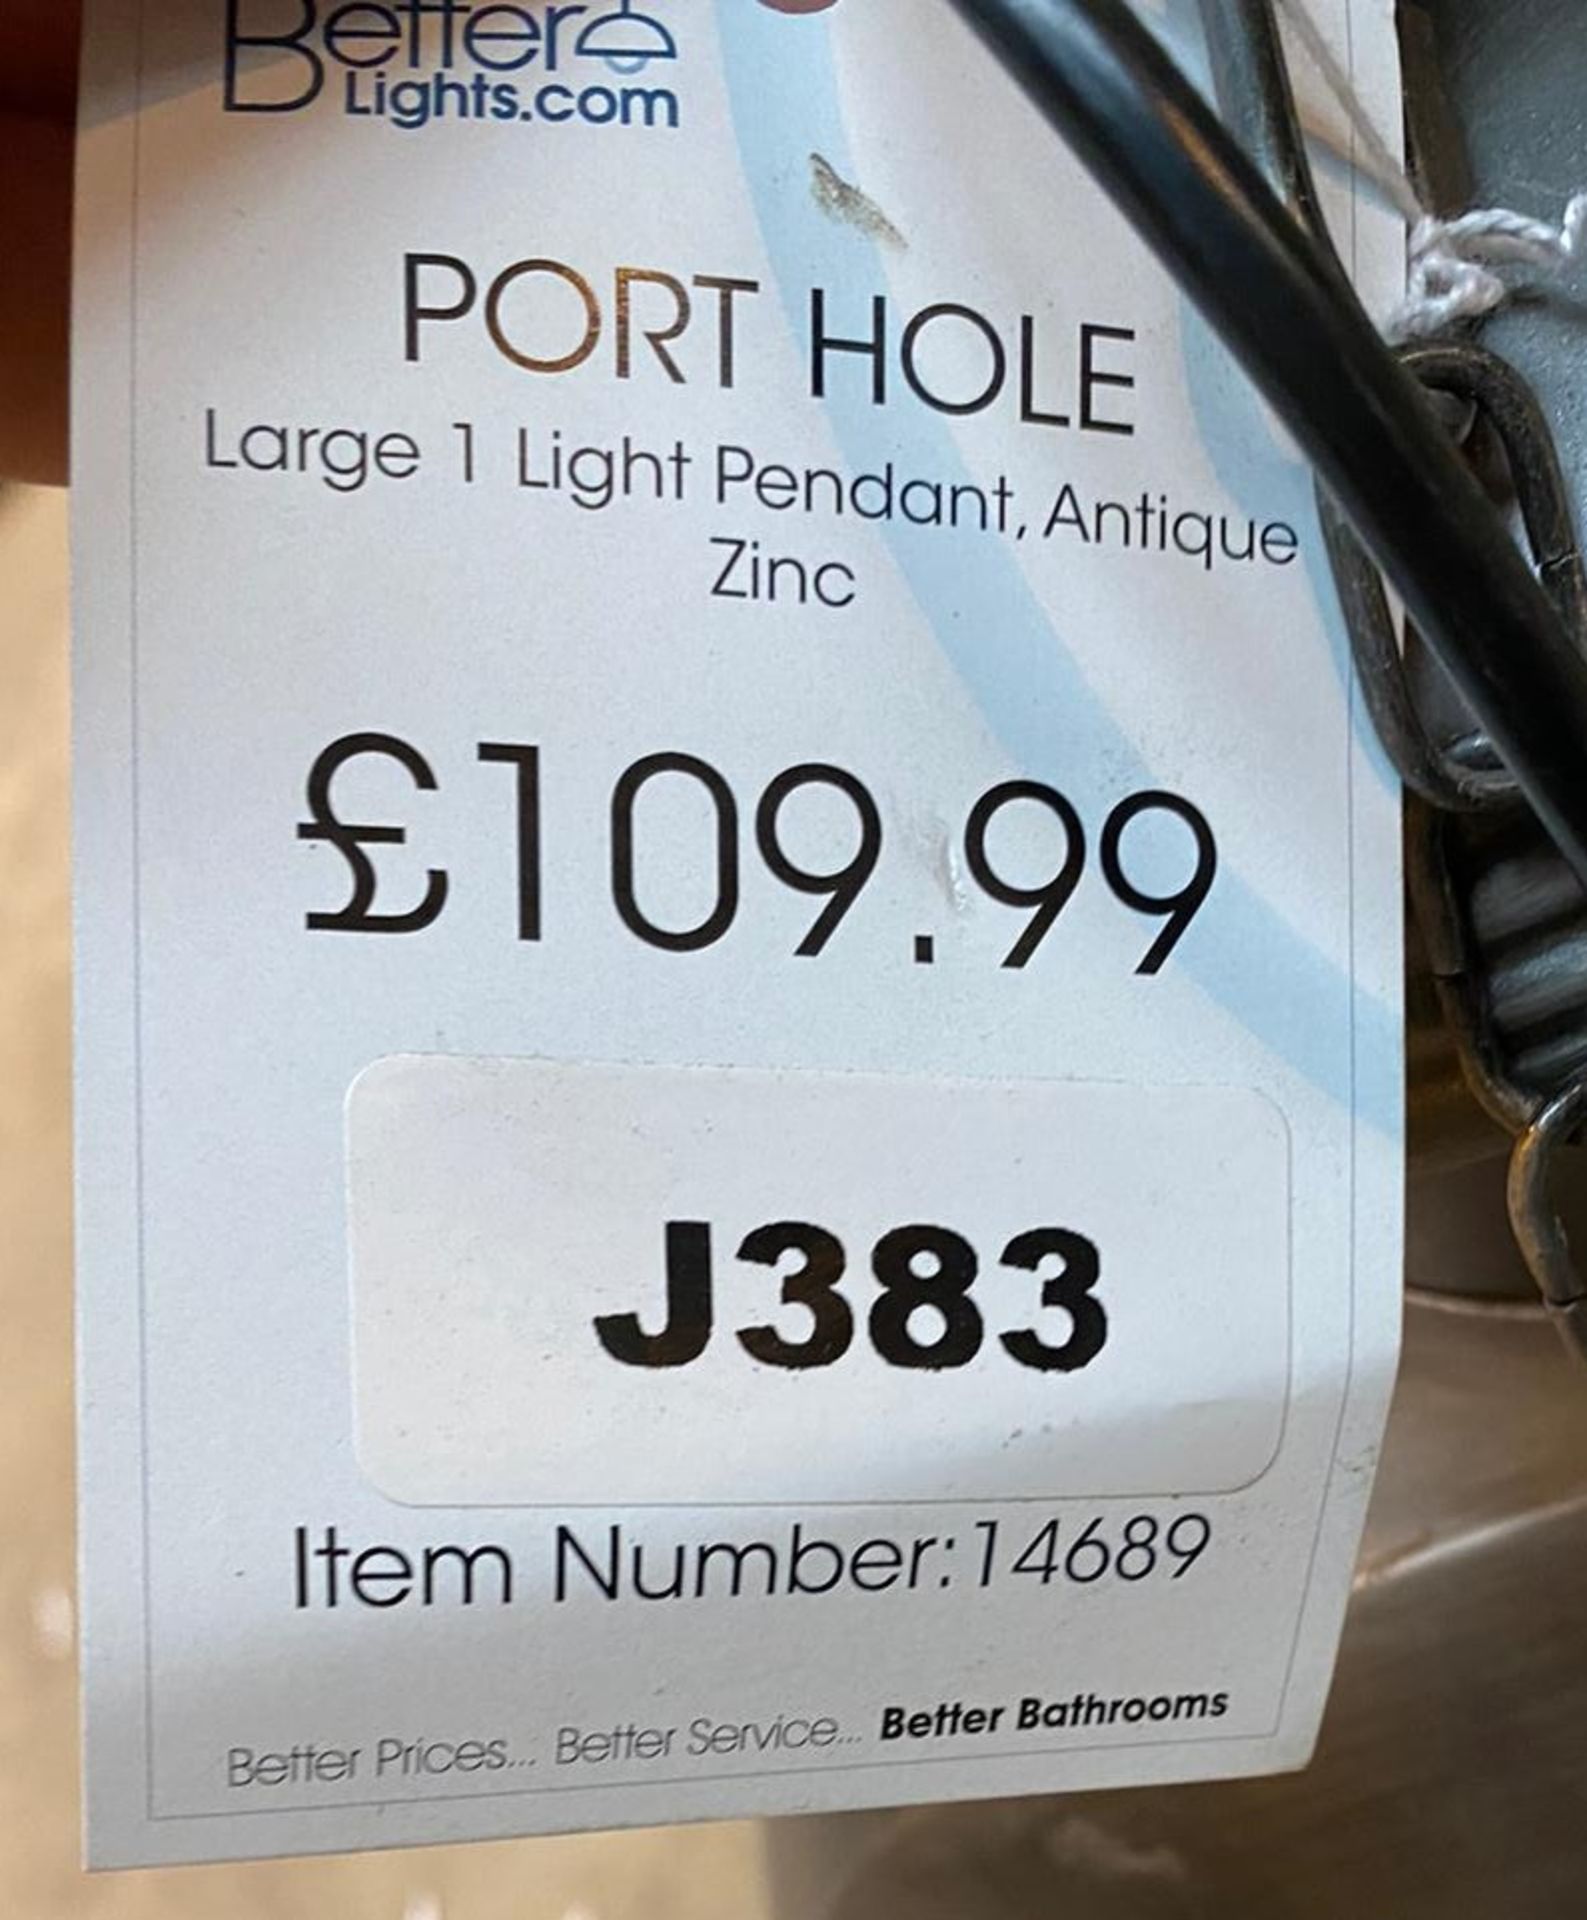 1 x Searchlight Port Hole Pendant Large - Ref: 2990-39SI - RRP: £110.00 - Location: Altrincham WA14 - Image 4 of 5